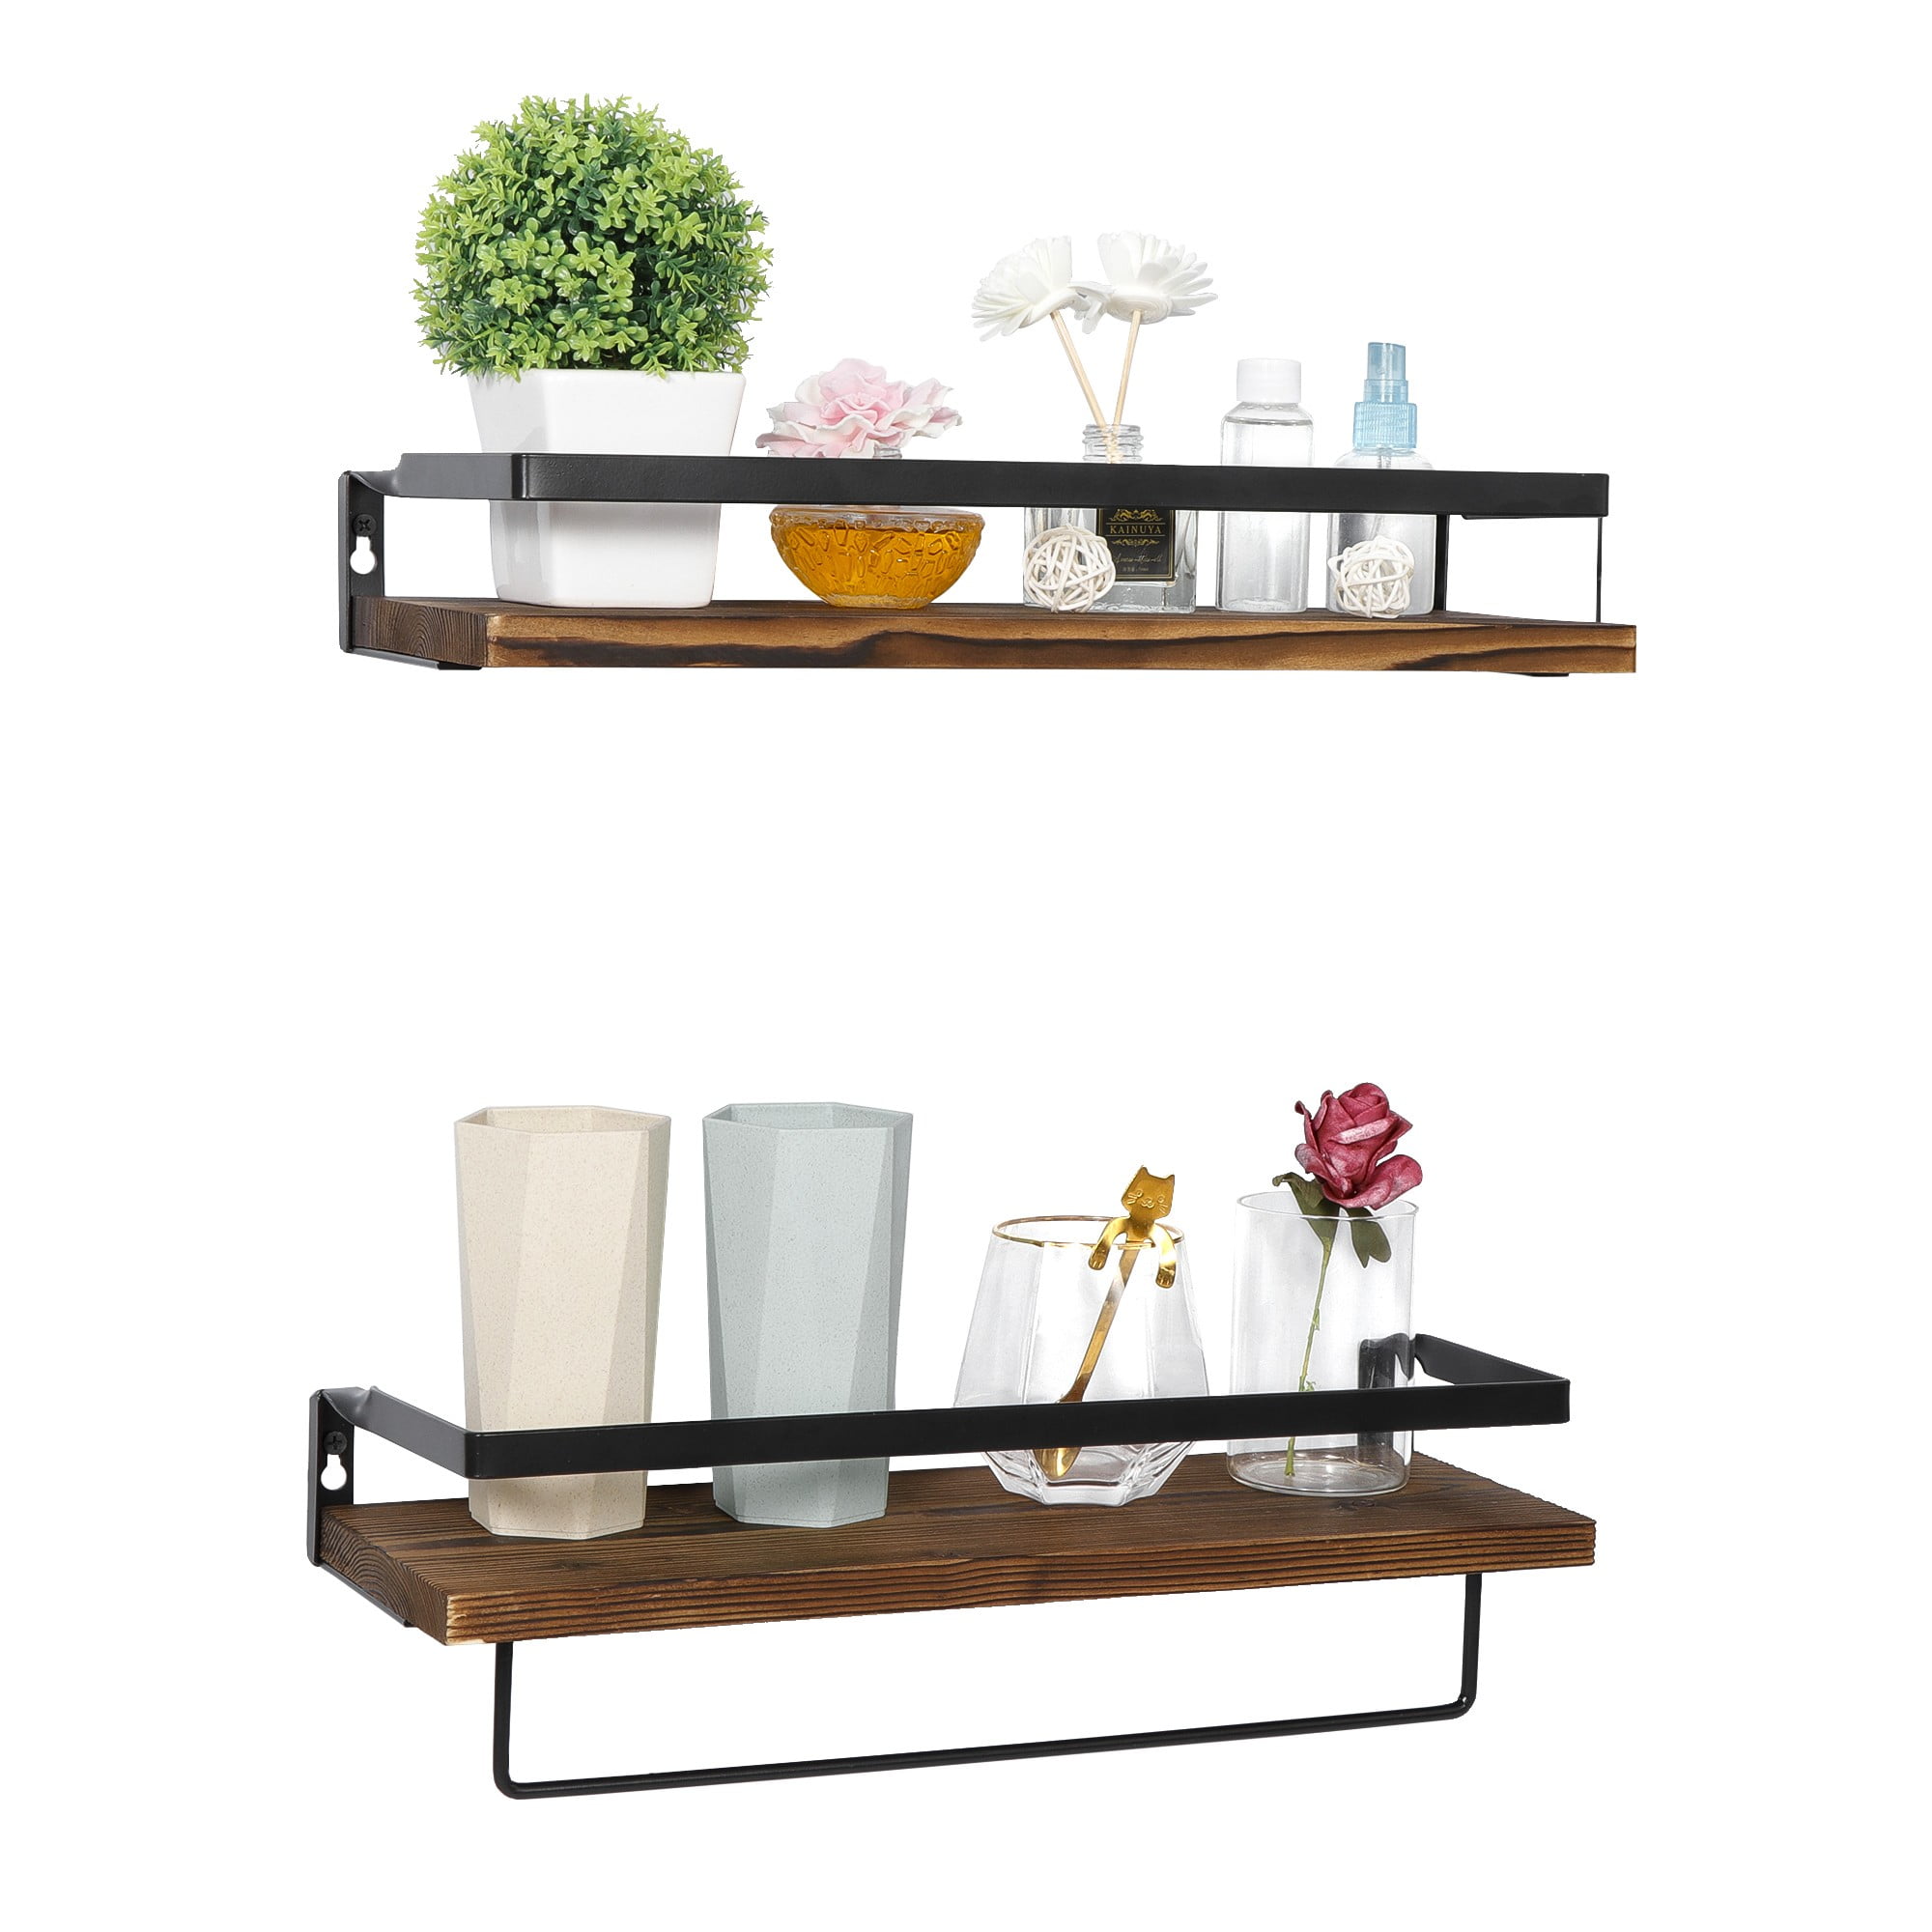 Zenstyle Metal Wood Floating Shelves 2, Detachable Wall Shelves